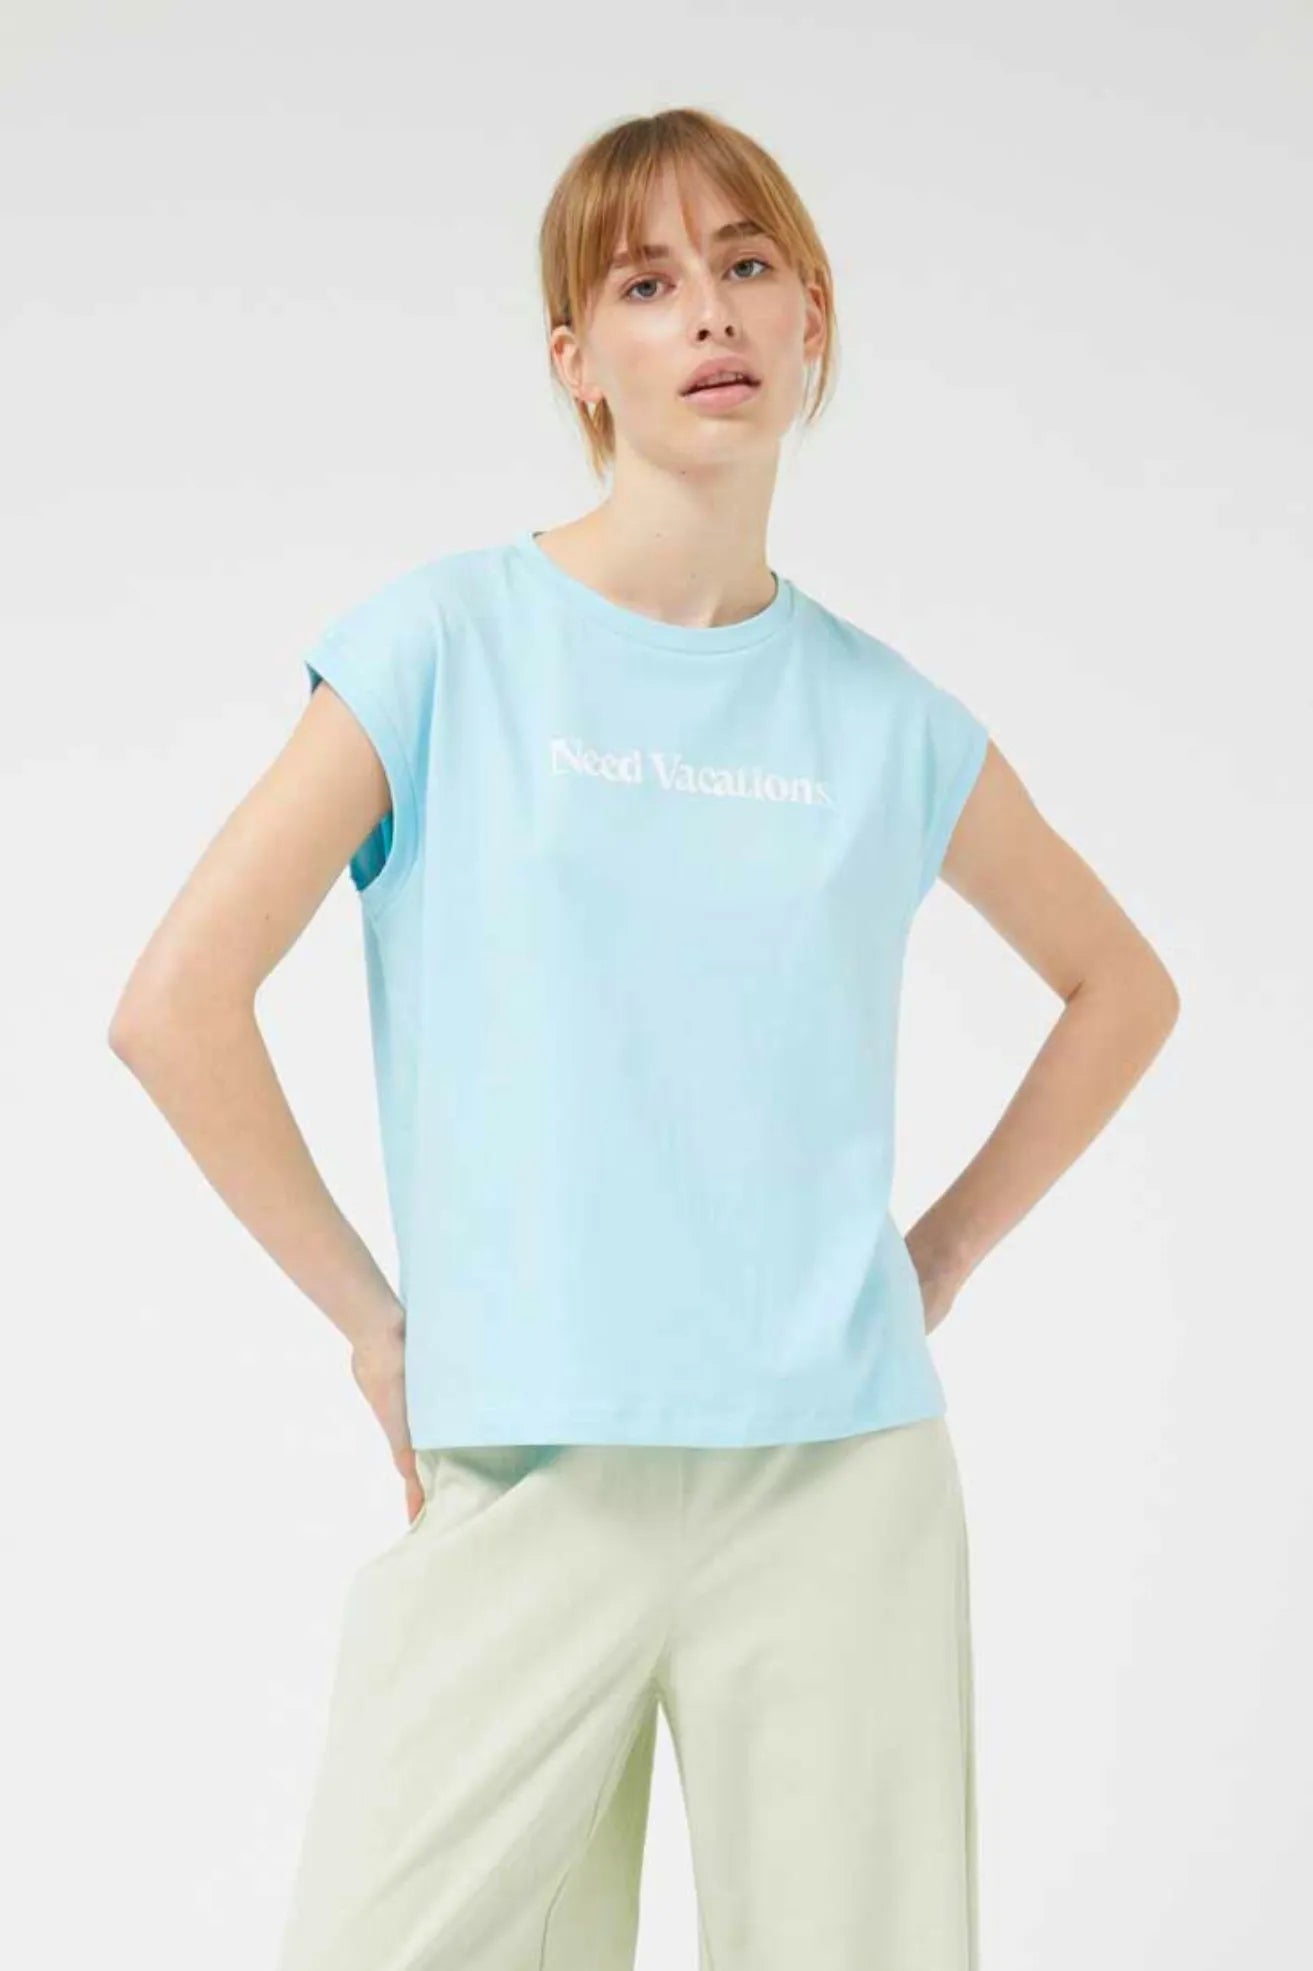 Compañia Fantastica Camiseta Mujer Need Vacations Azul